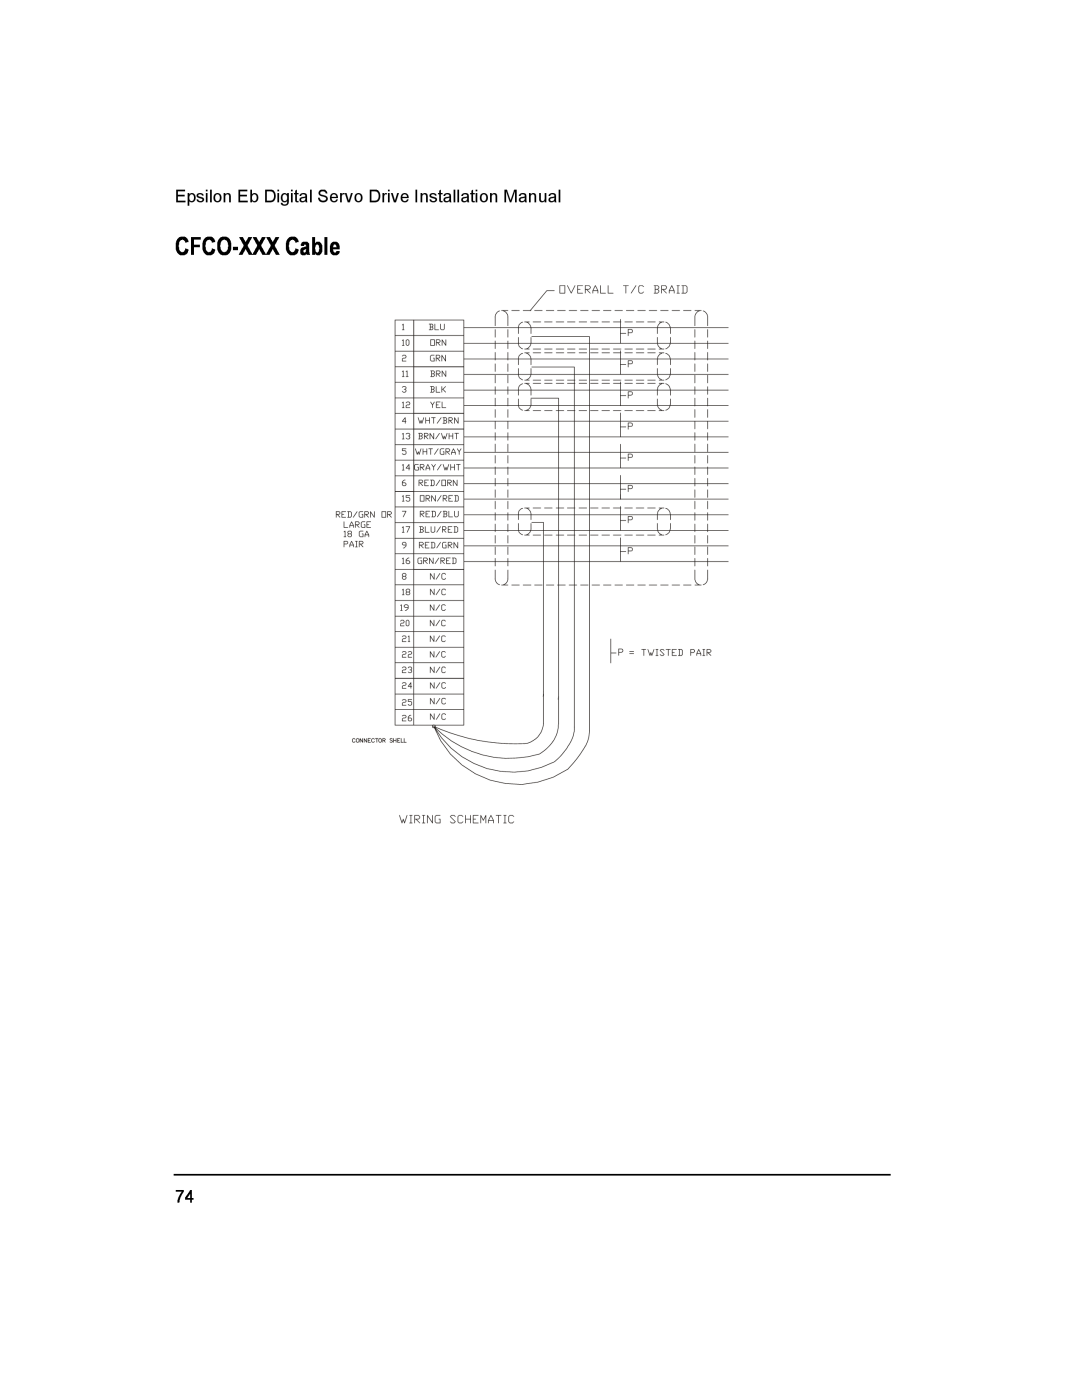 Emerson 400501-05 installation manual CFCO-XXX Cable, Epsilon Eb Digital Servo Drive Installation Manual 